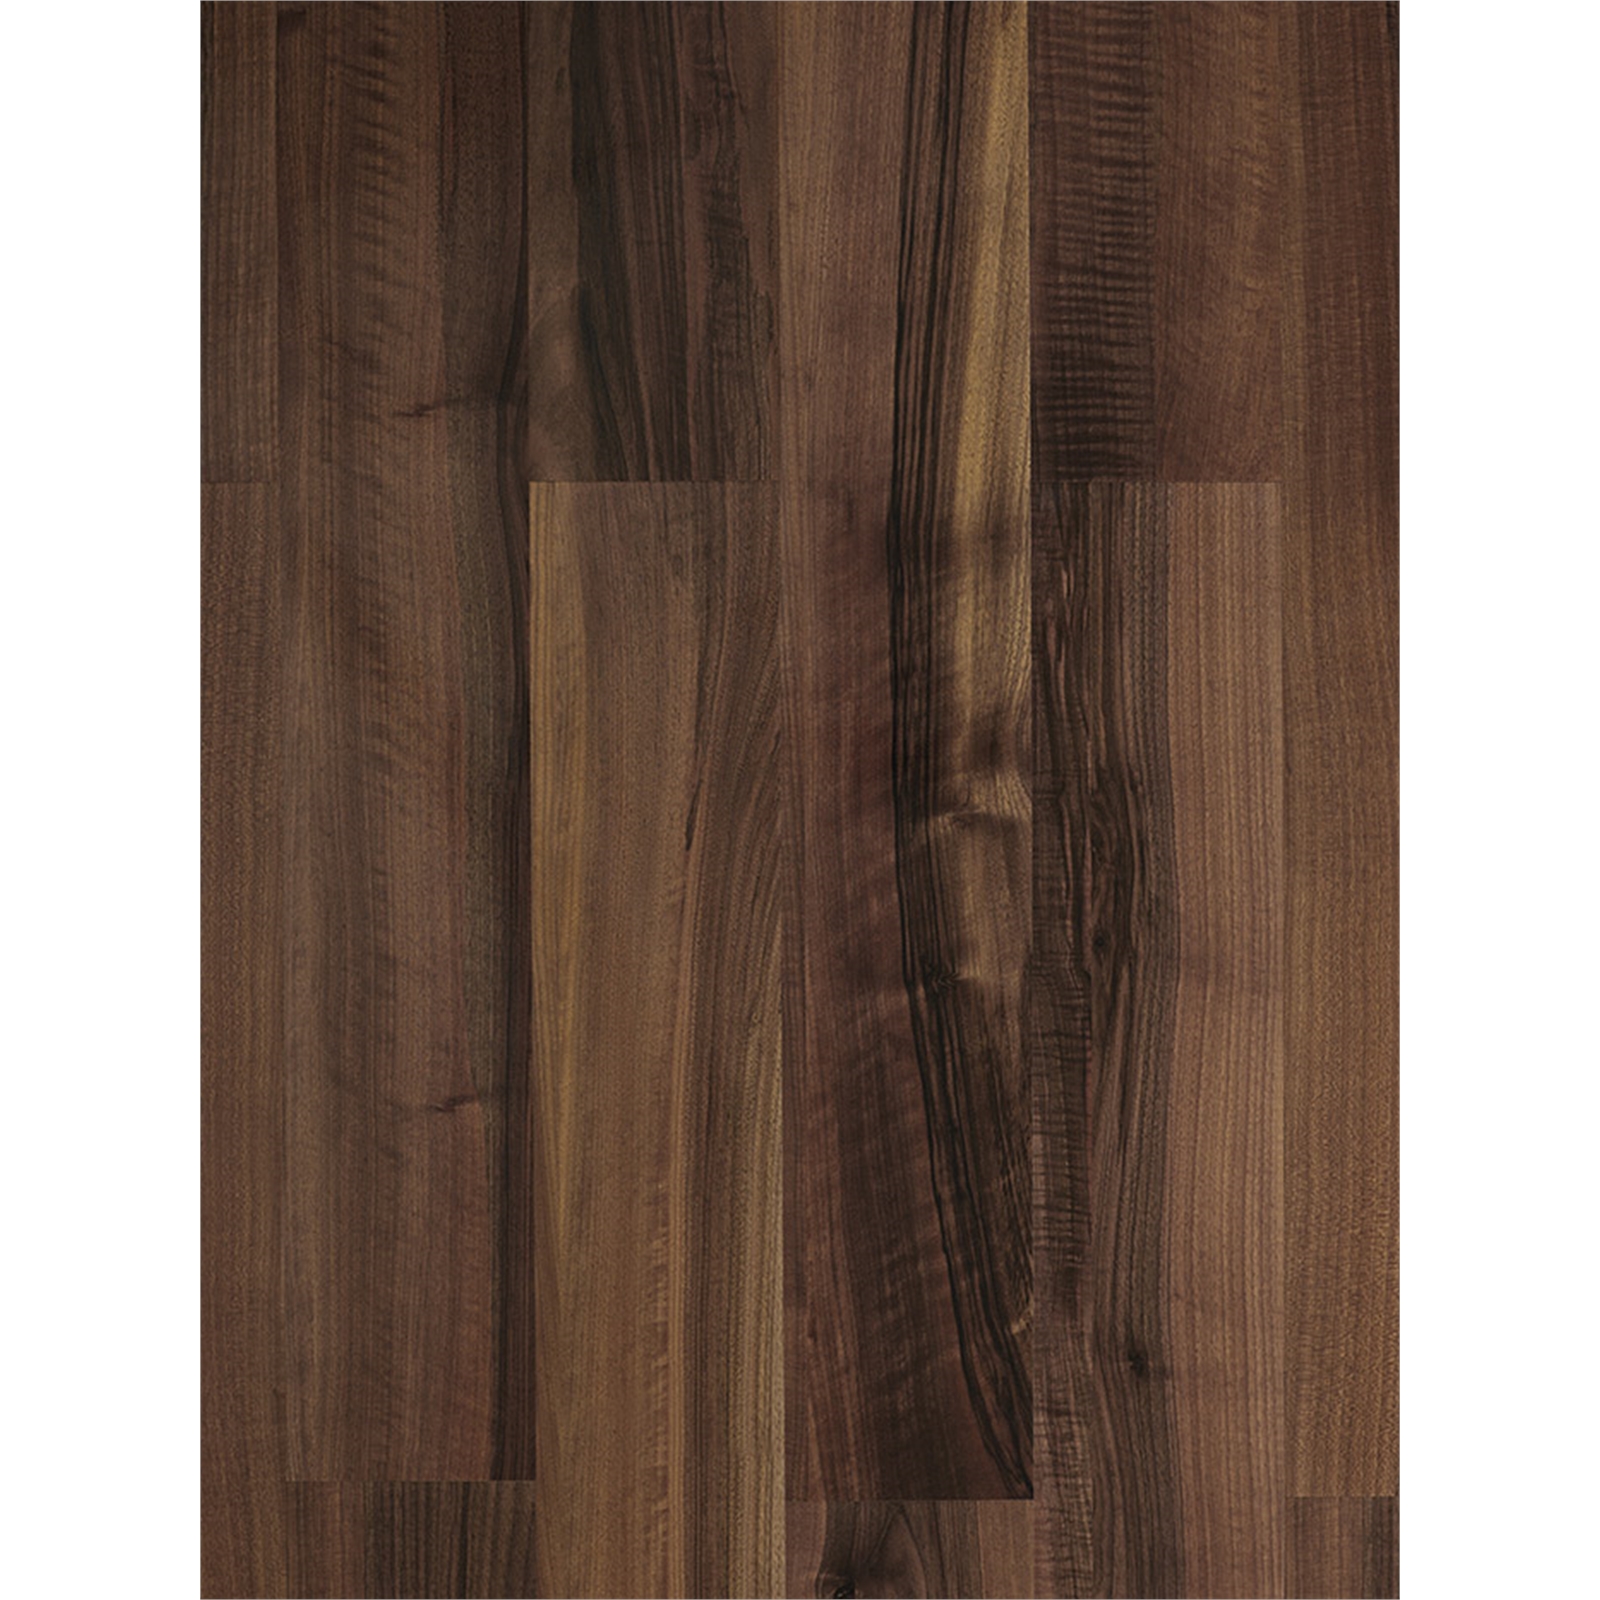 Formica 8mm Queensland Walnut Flooring Sample